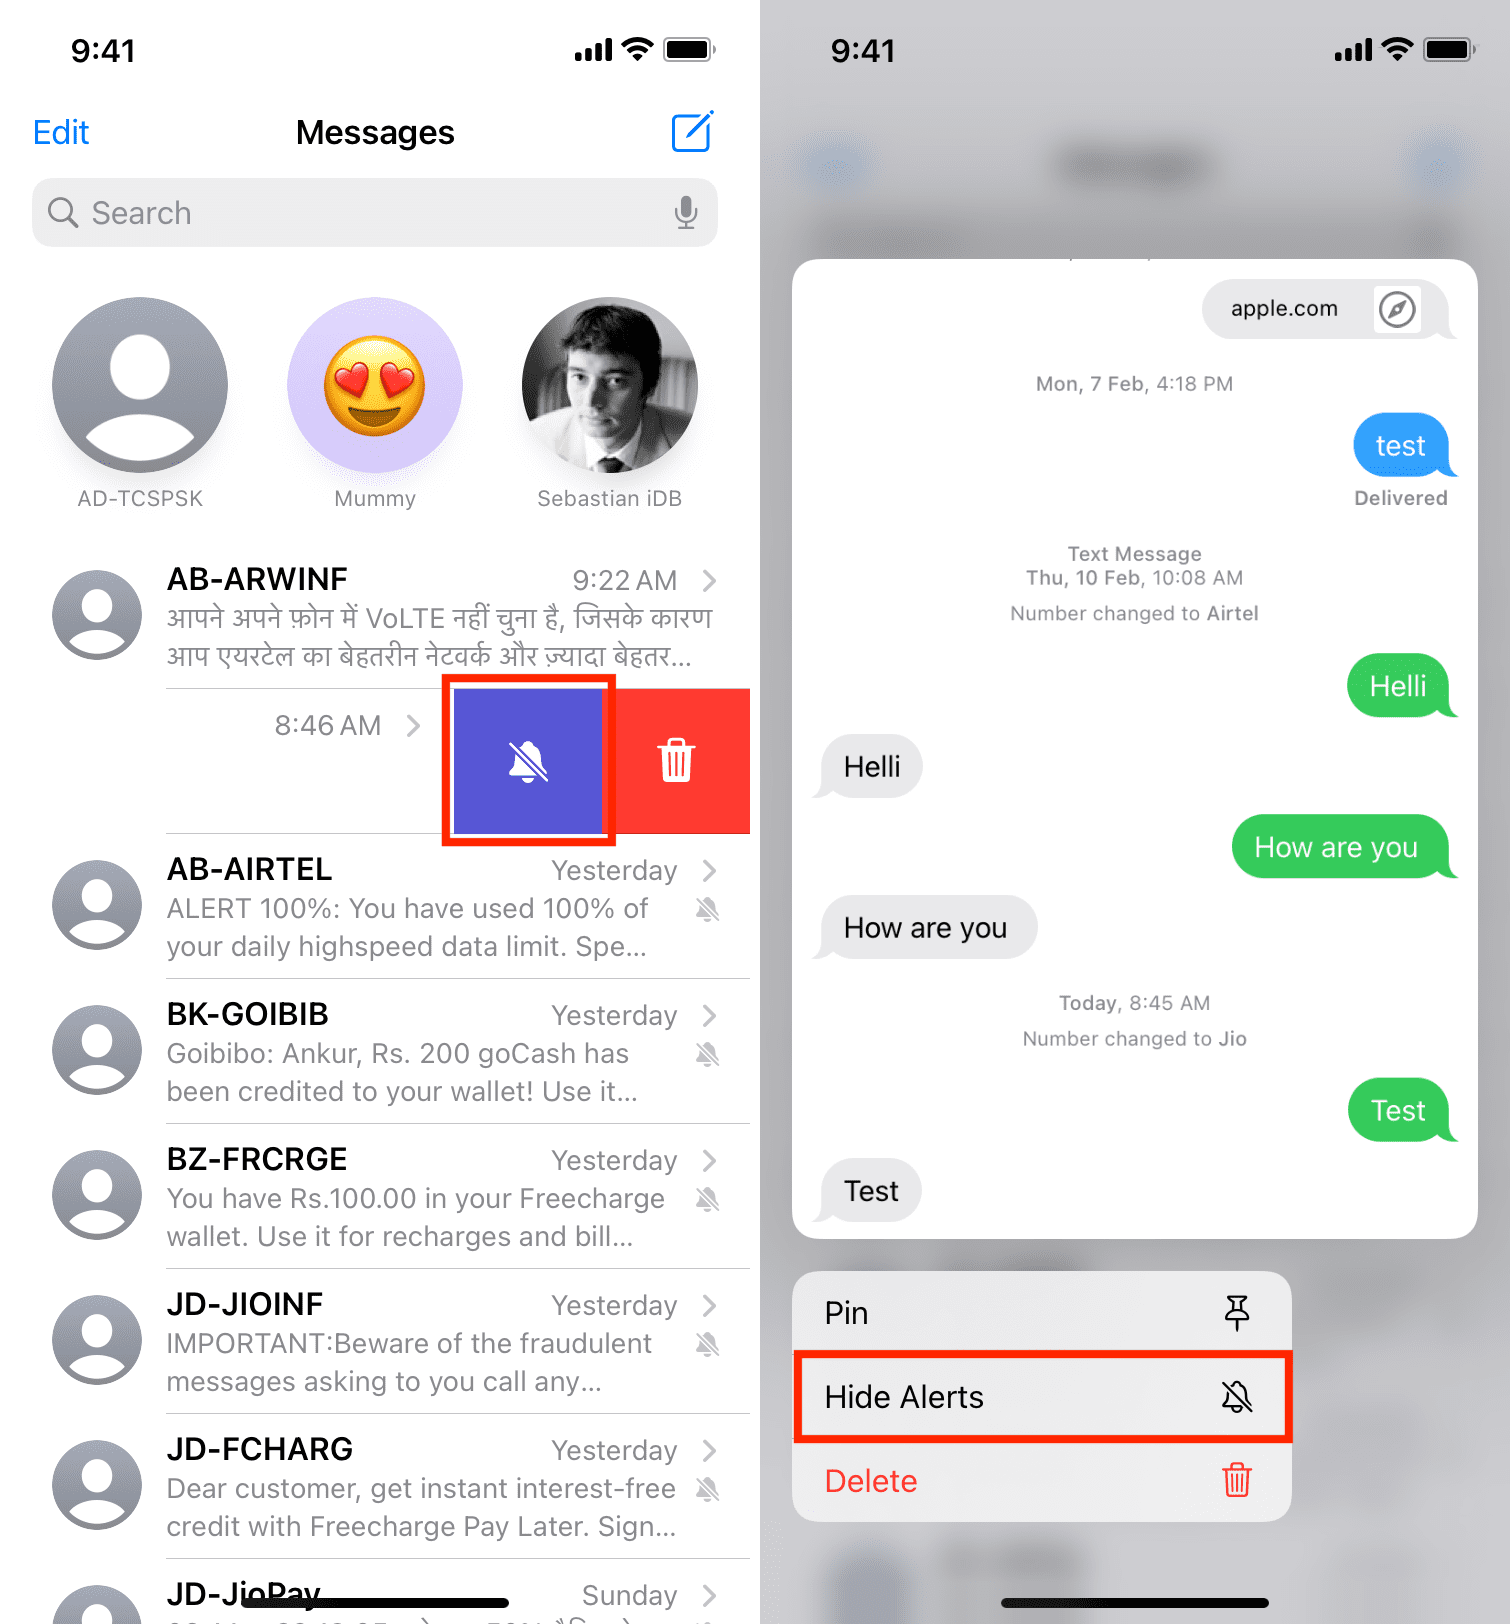 Hide Alerts in iPhone Messages app